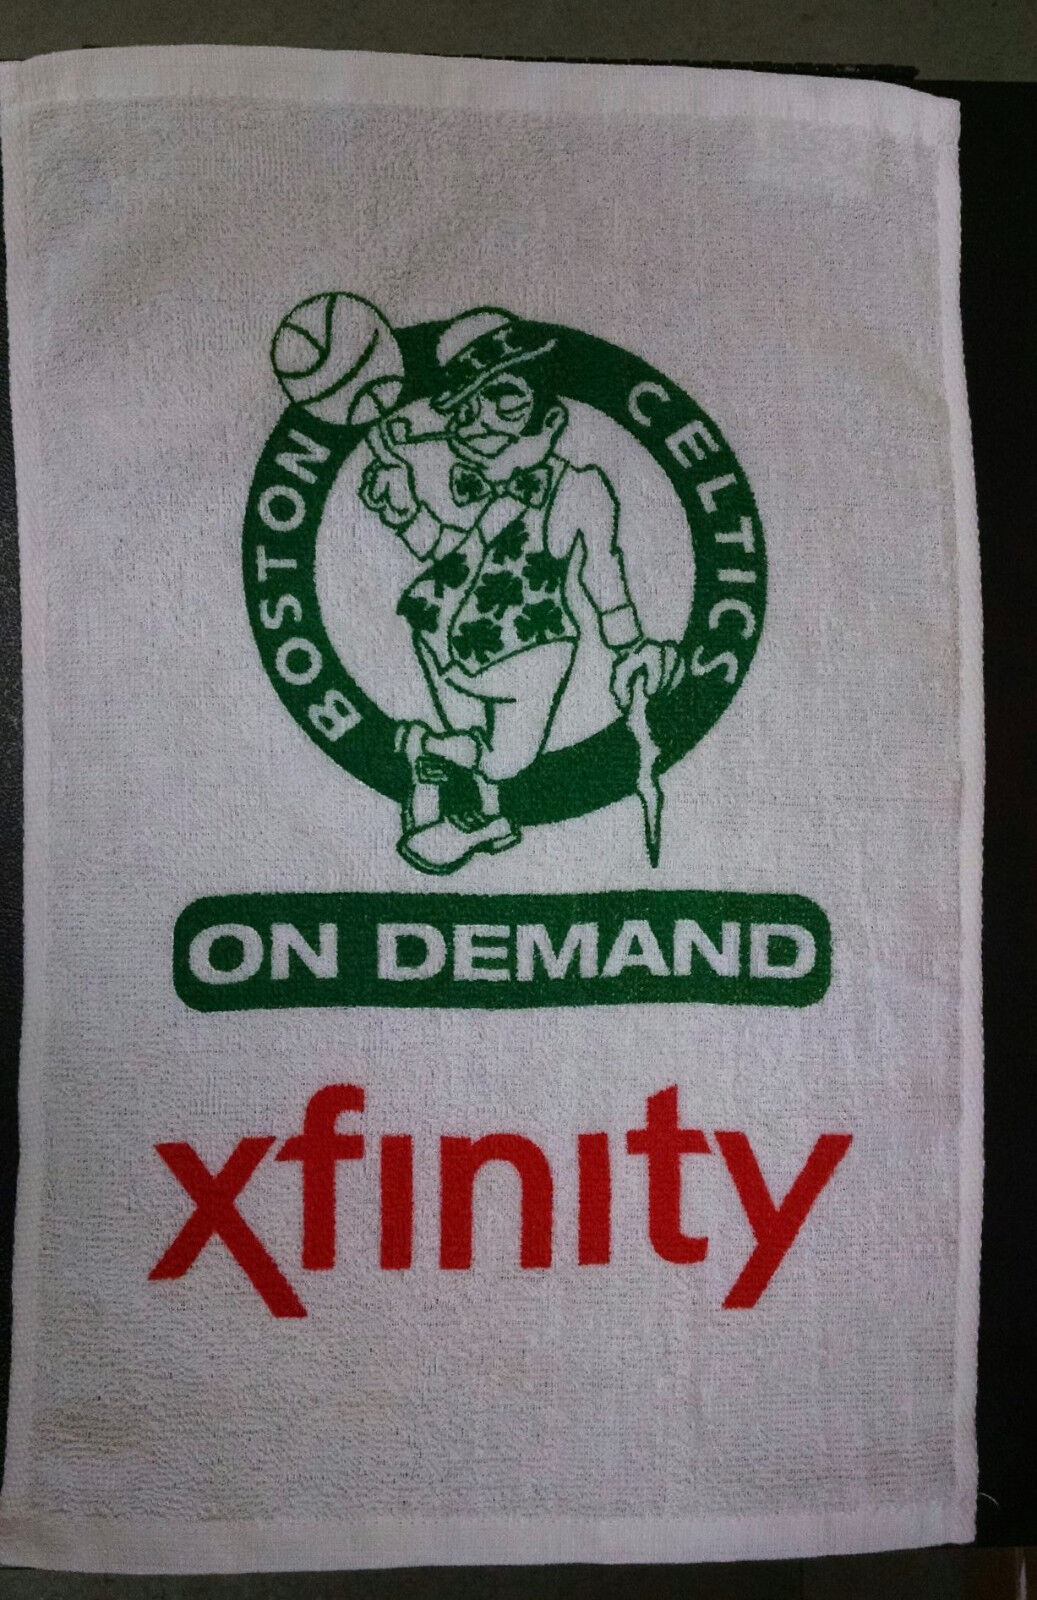 Lot of 48 pieces - Boston Celtics 11x18 Rally Towel - NEW